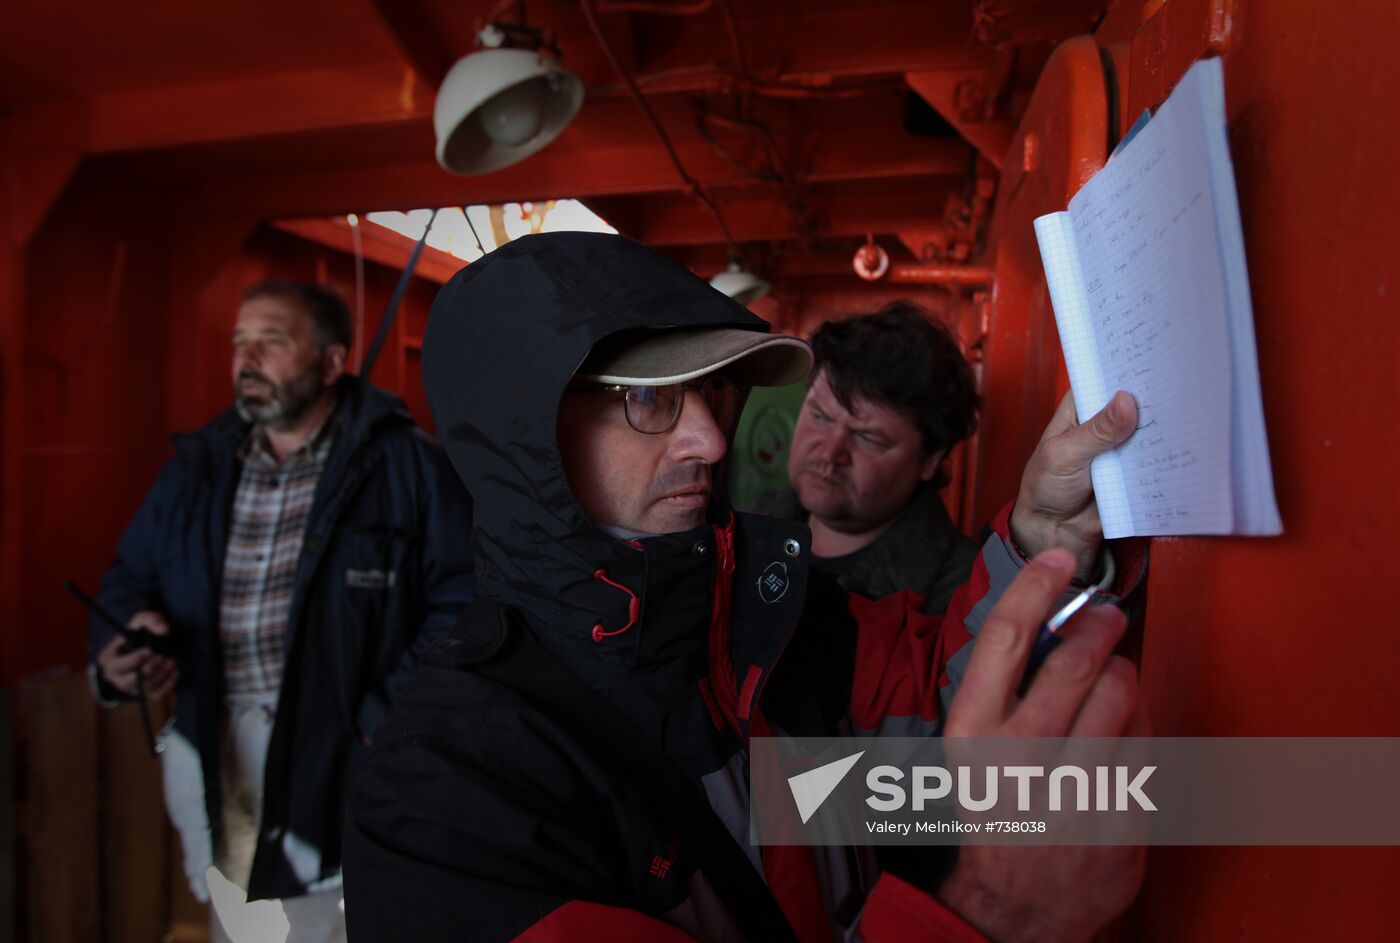 Expedition of Neotrazimy tug boat to New Land archipelago